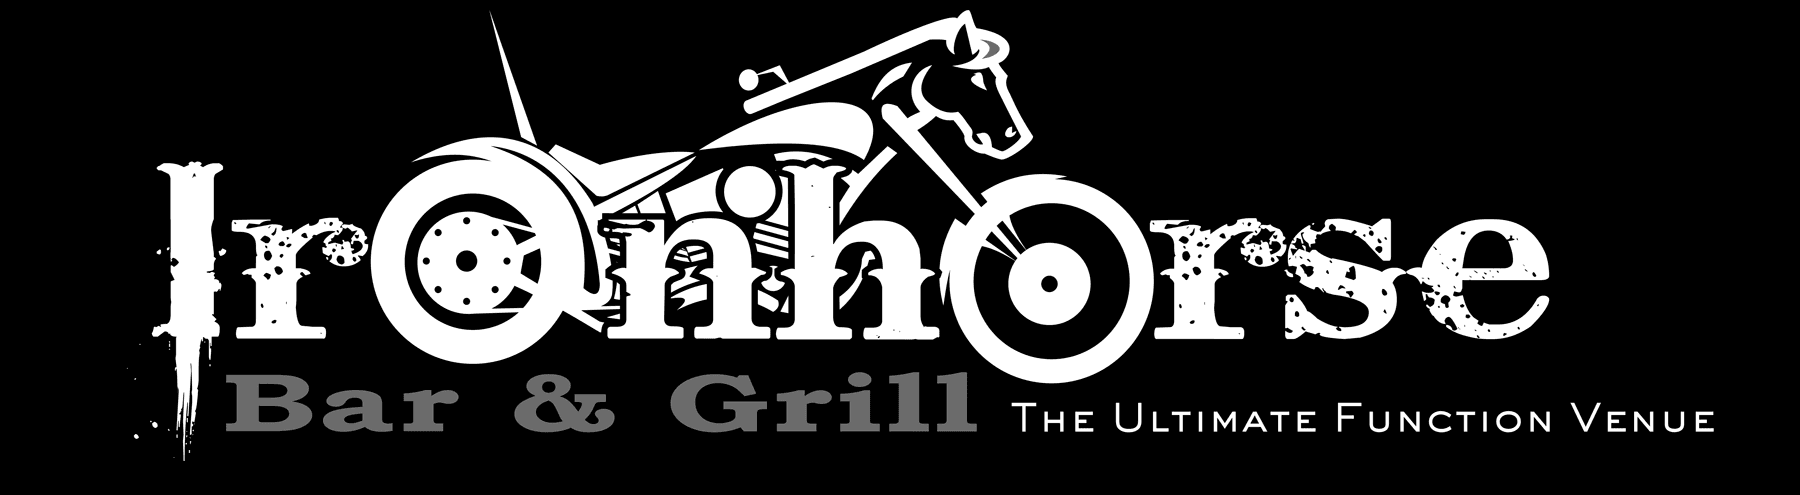 Iron Horse Bar & Grill logo